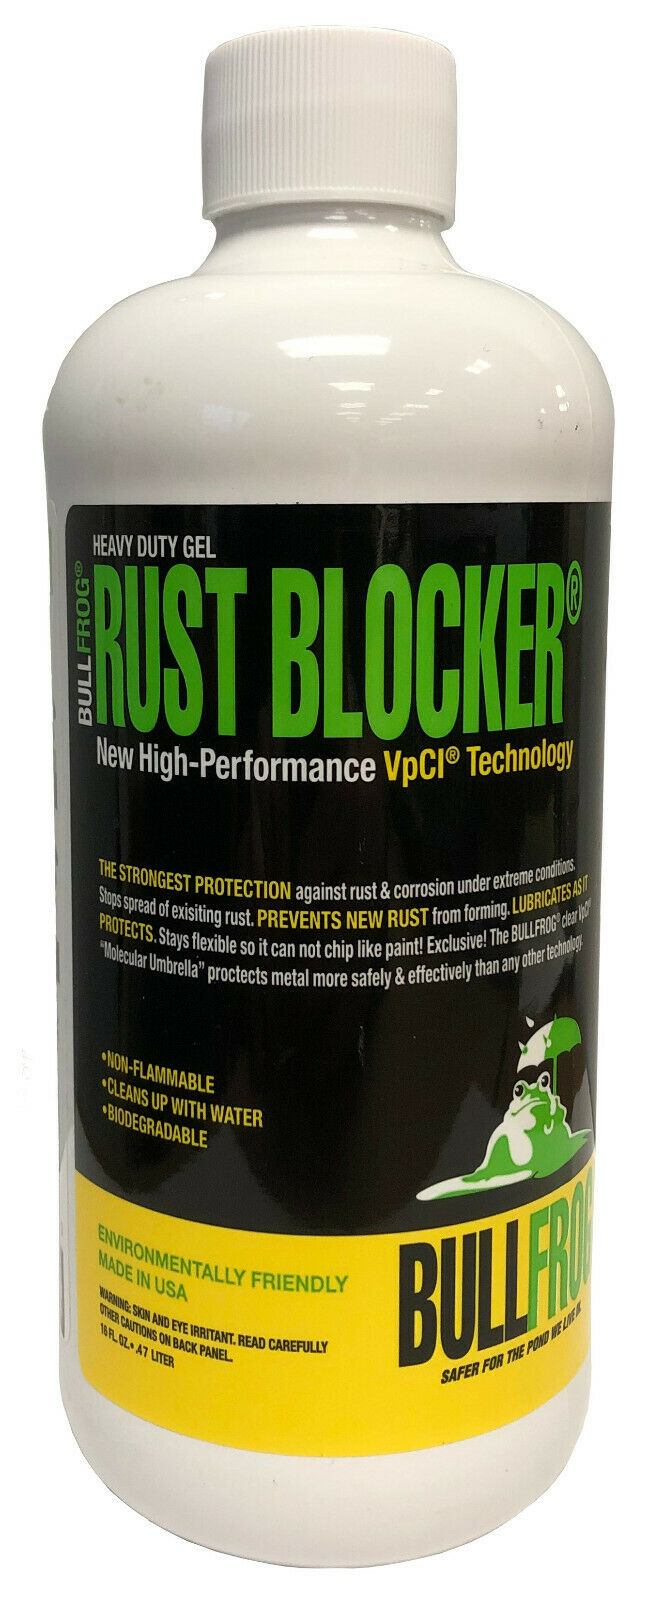 BullFrog 93896 Rust Blocker Heavy Duty Gel Protects Against Formation of Rust, 16oz